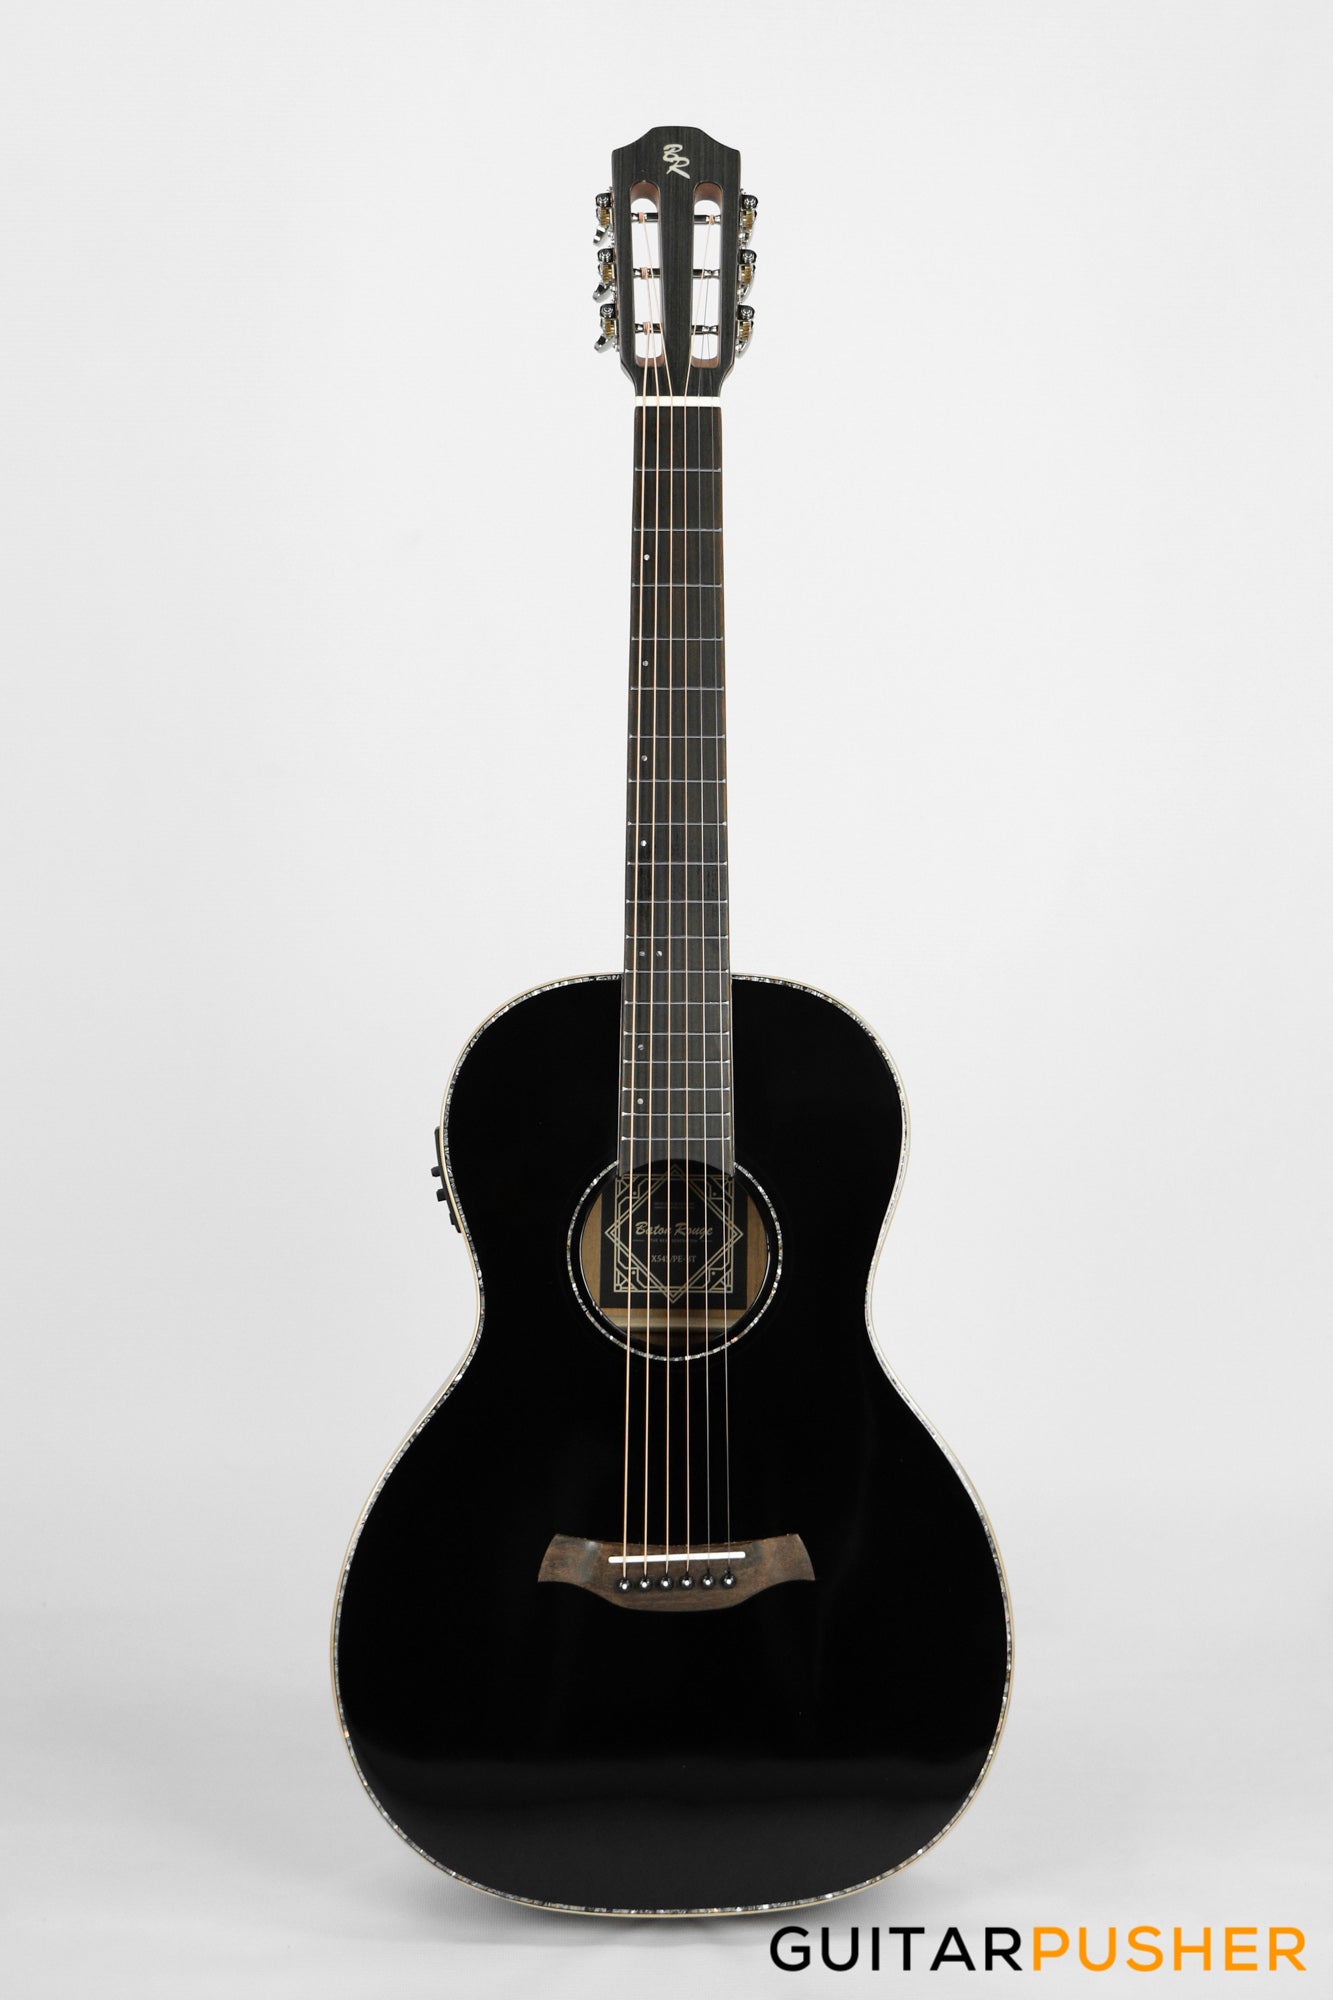 Baton Rouge X54S/PE-BT Solid Spruce Top Parlor Acoustic-Electric Guitar